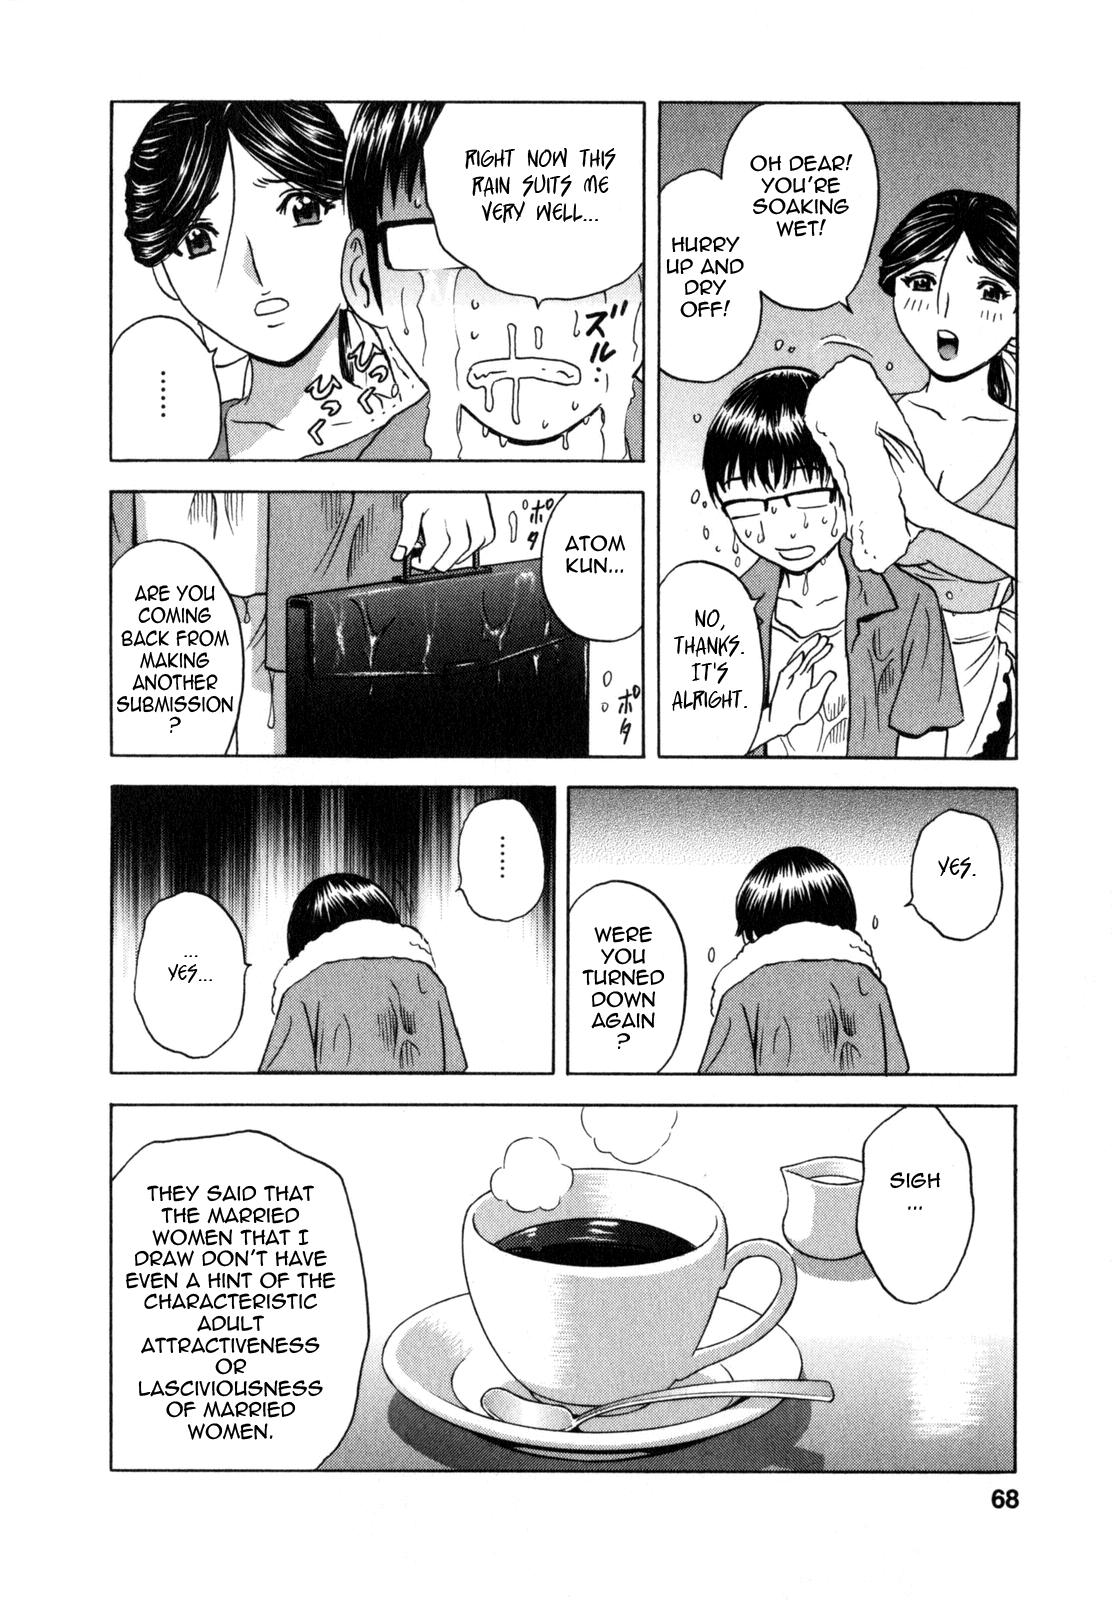 [Hidemaru] Life with Married Women Just Like a Manga 1 - Ch. 1-9 [English] {Tadanohito} 71